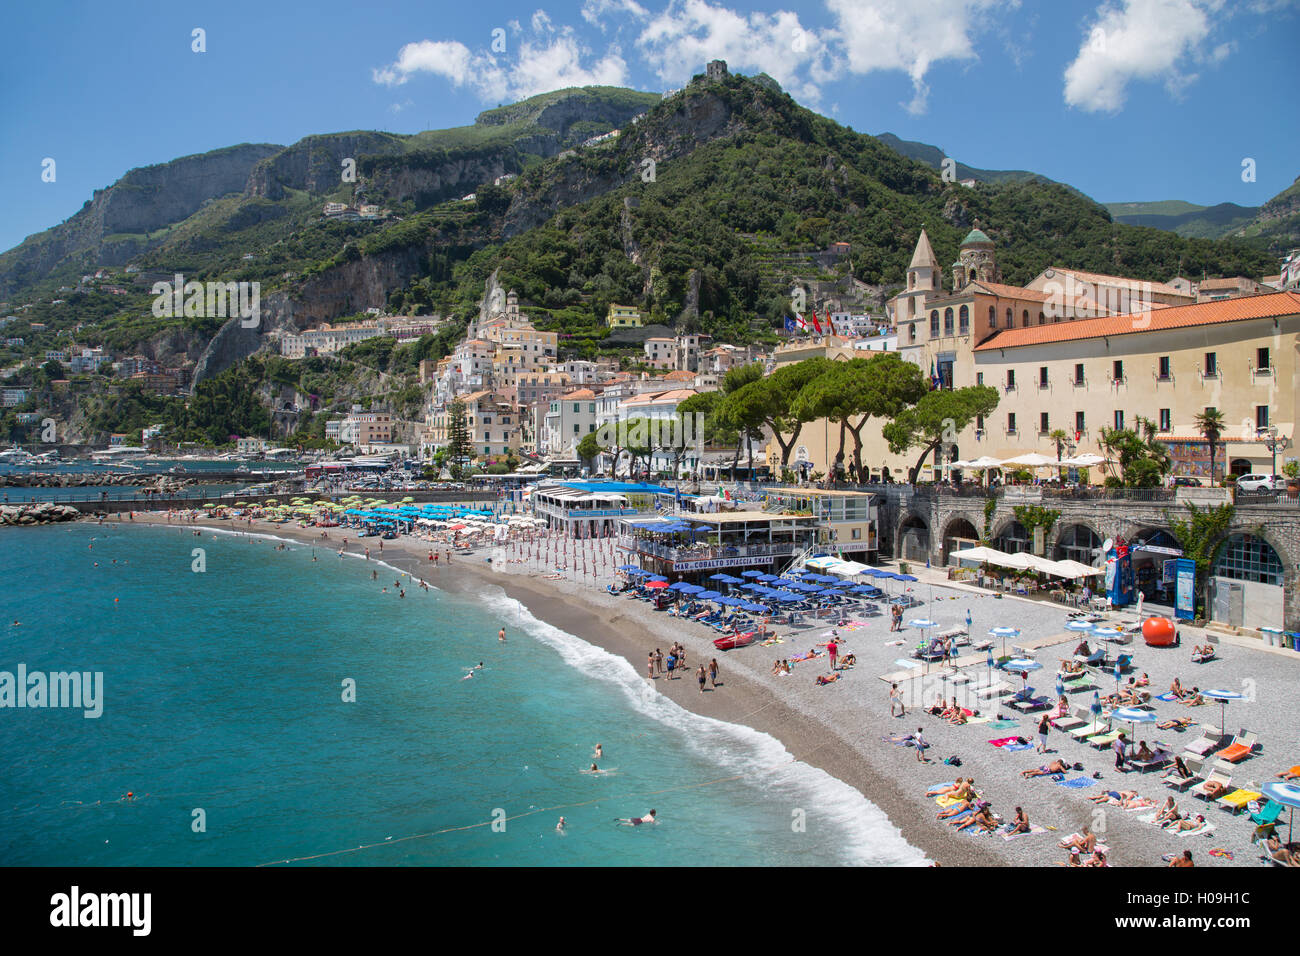 Promenade, Amalfi, Costiera Amalfitana (Amalfi Coast), UNESCO World Heritage Site, Campania, Italy, Europe Stock Photo